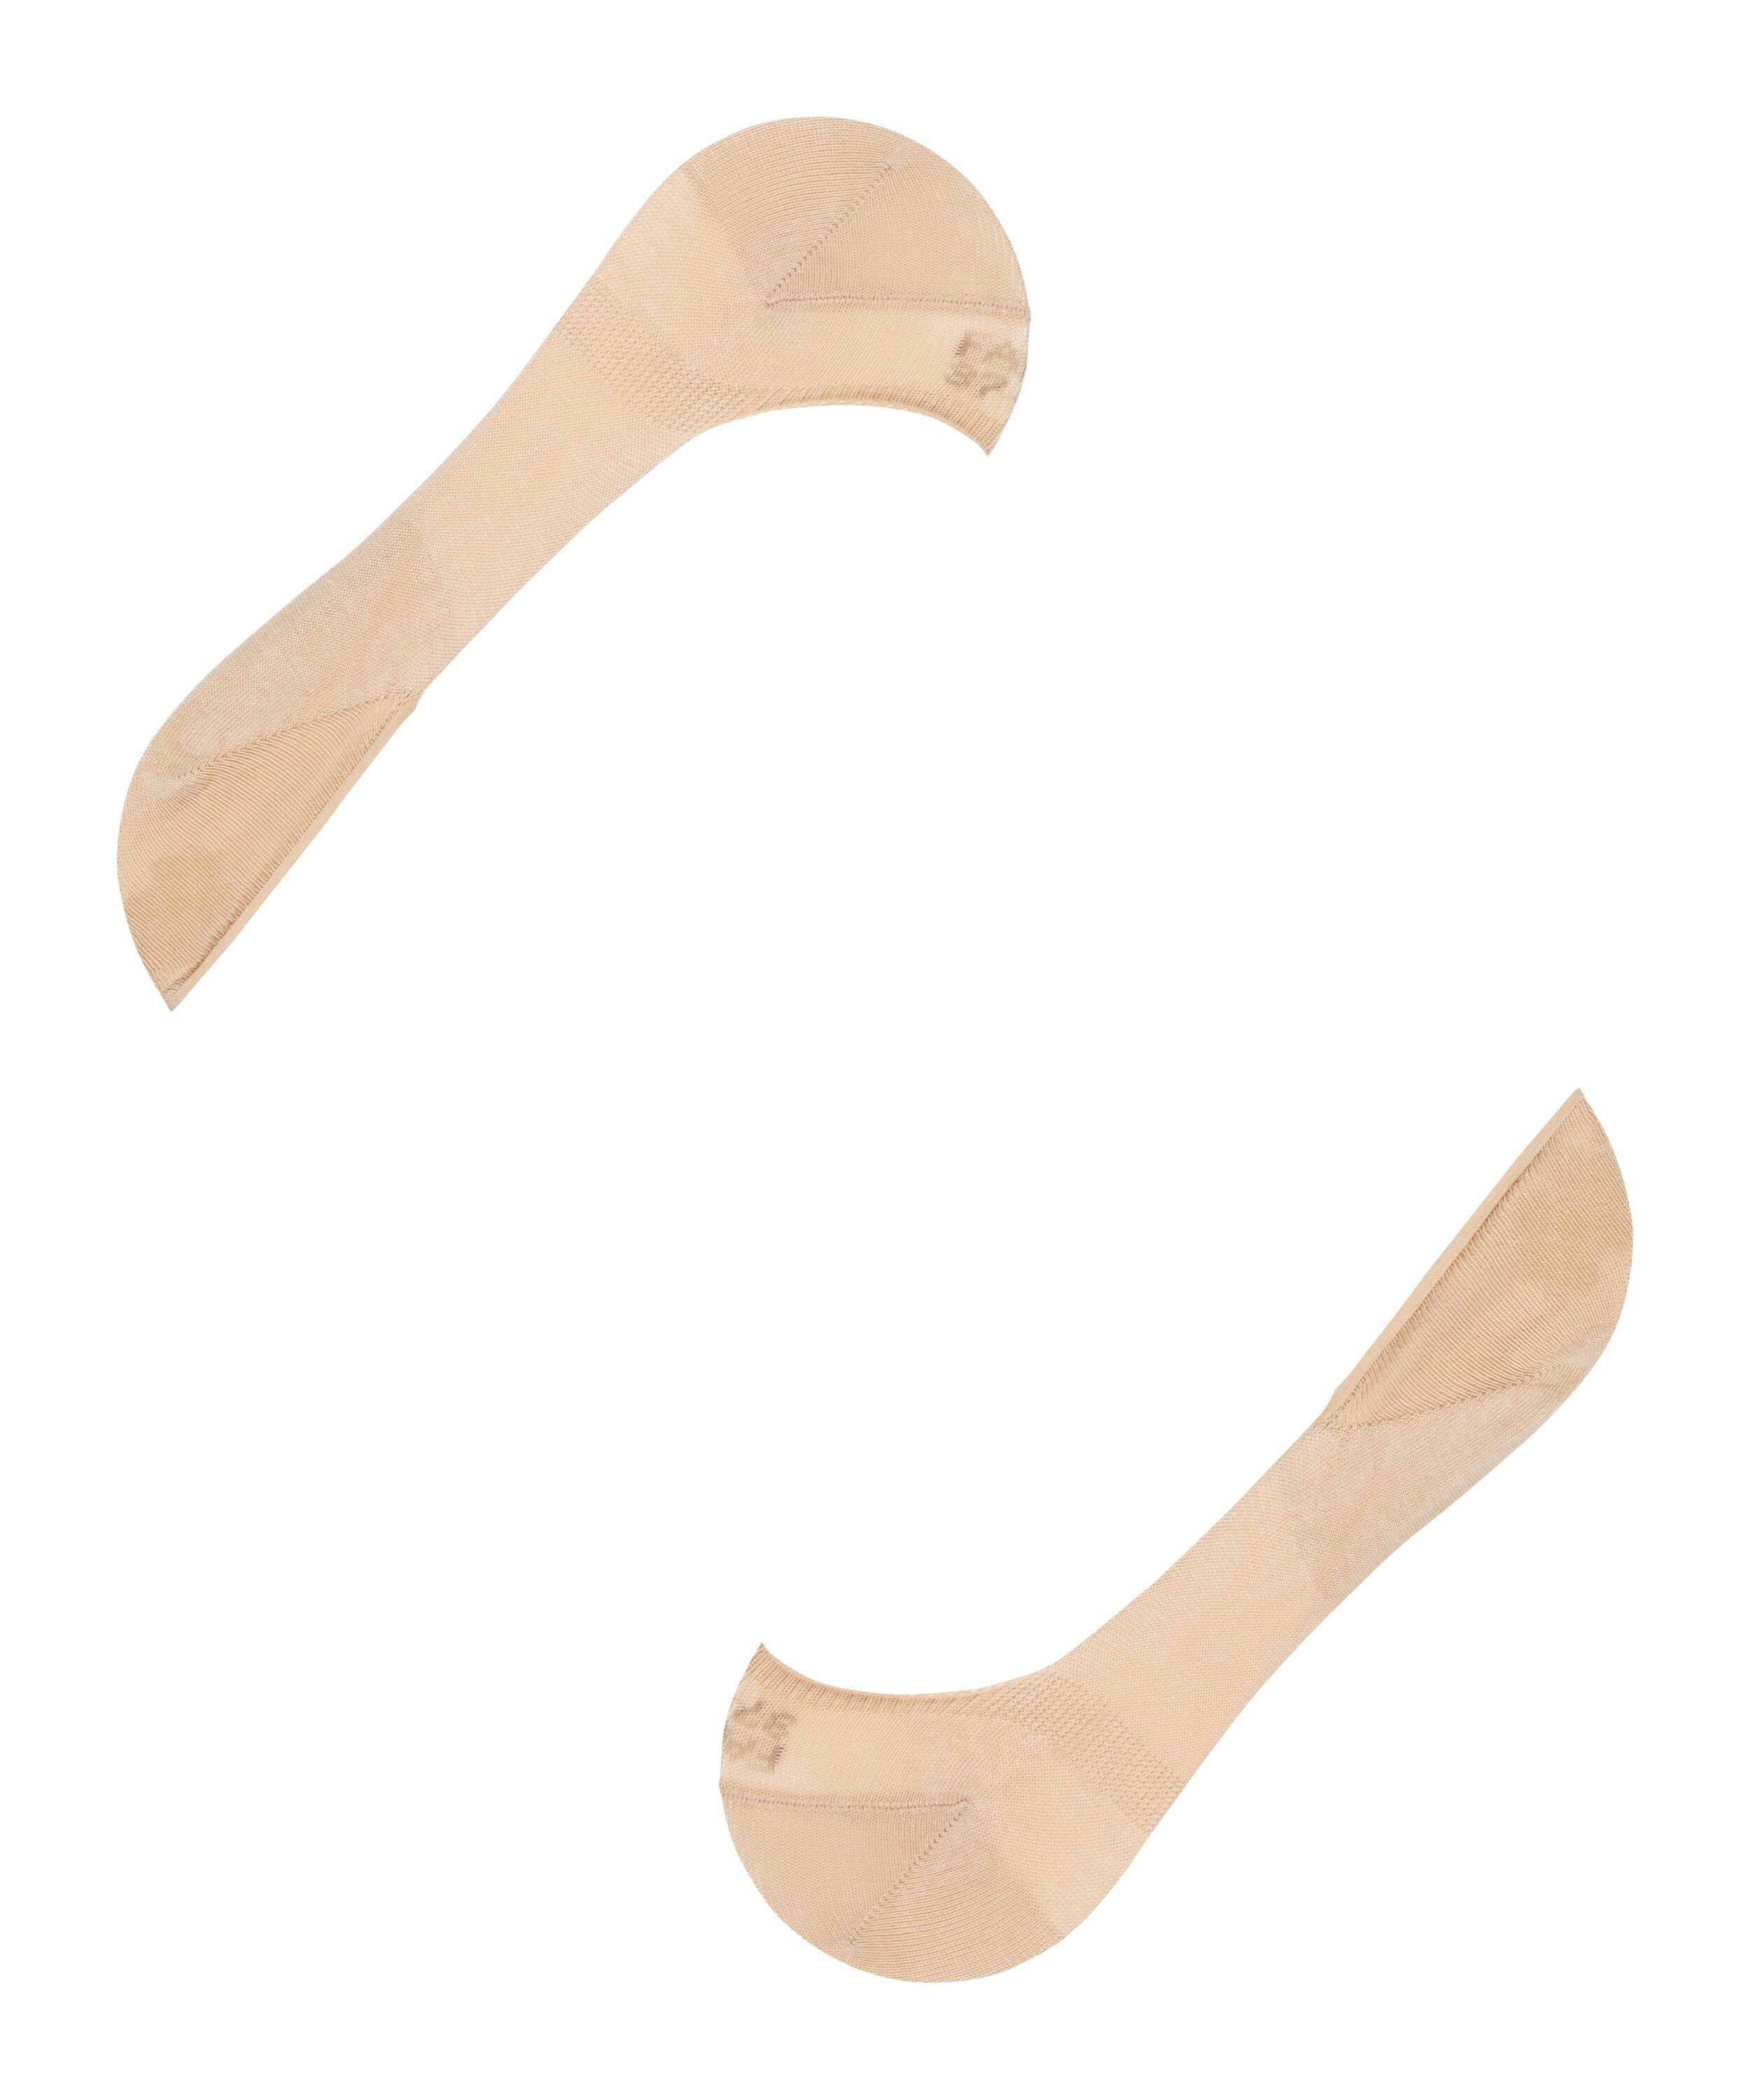 FALKE Füßlinge Step Medium (4011) Box Cut mit cream Anti-Slip-System